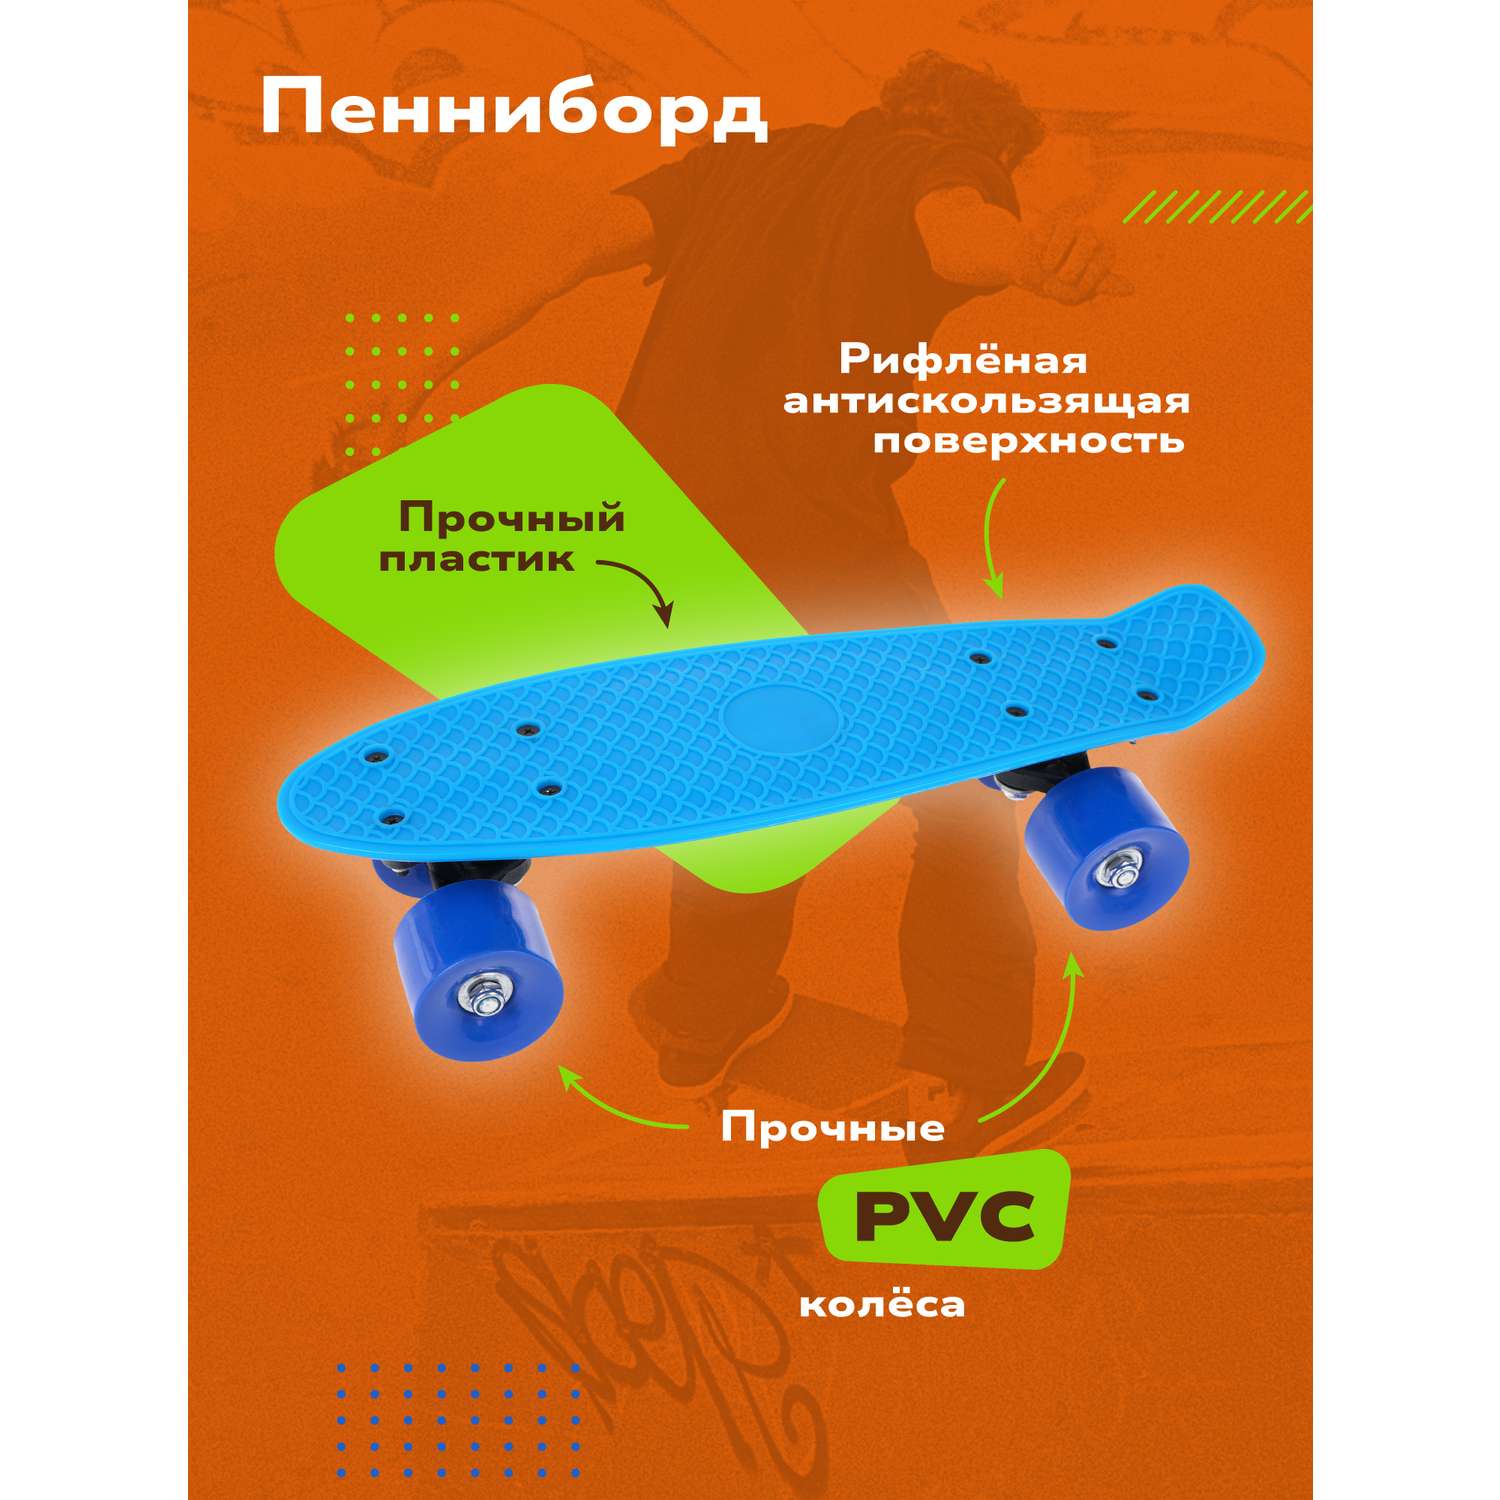 Скейтборд Наша Игрушка пенниборд пластик 41x12 см с большими PVC колесами. Голубой - фото 1